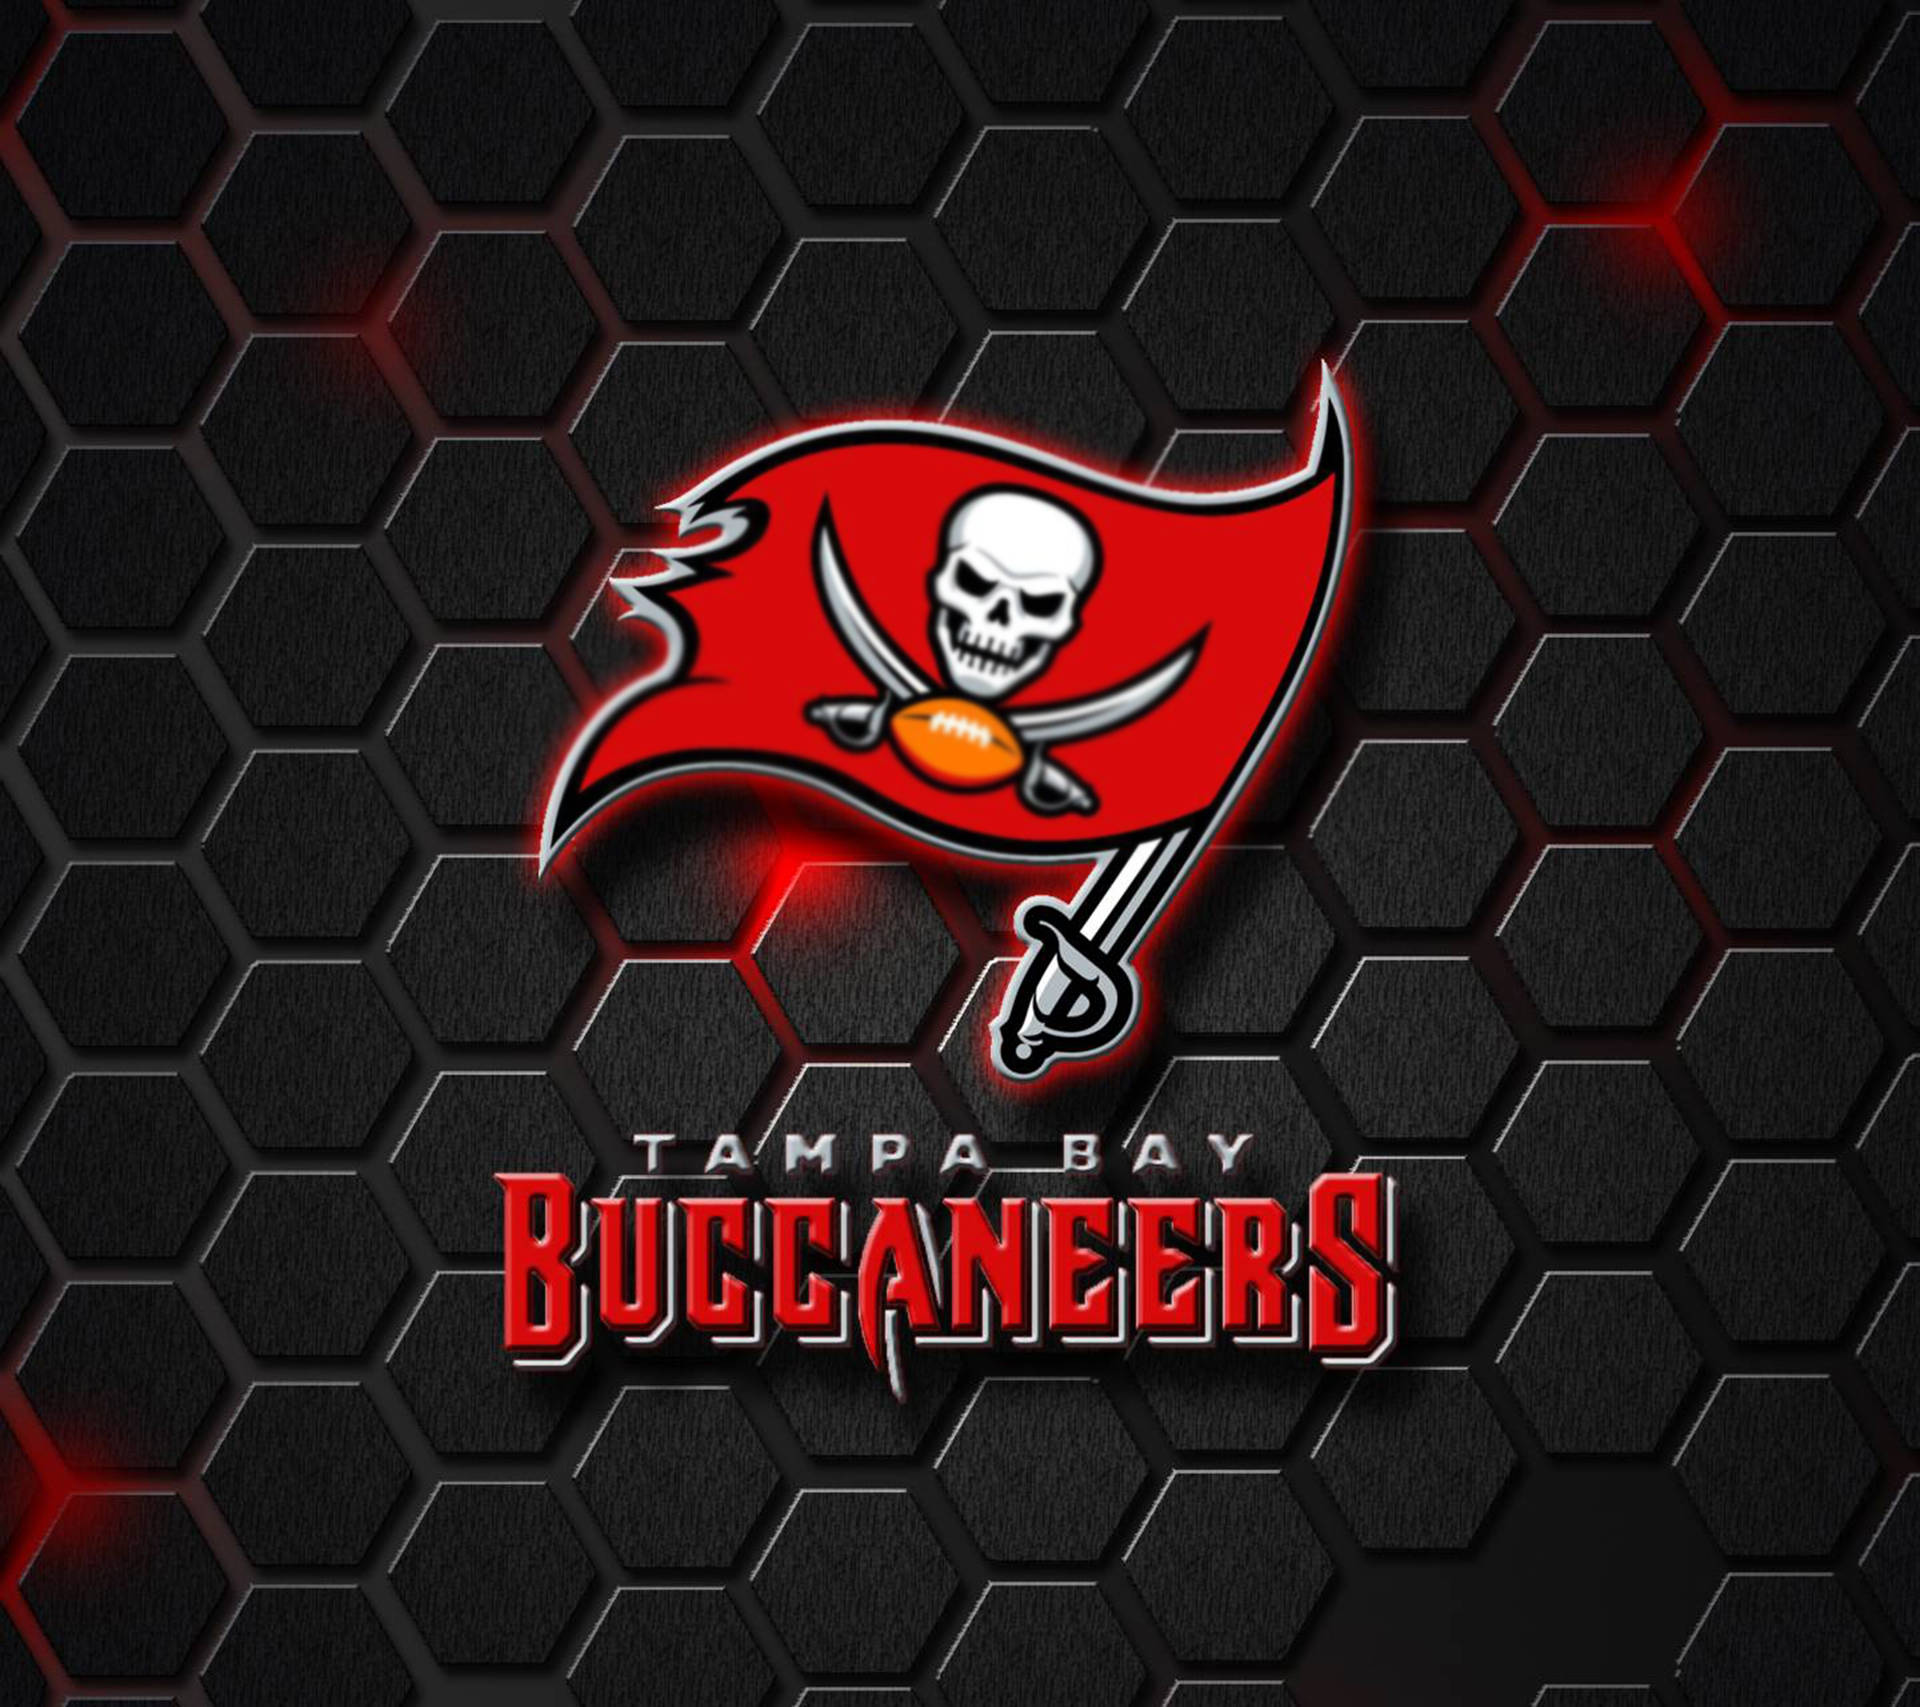 Tampa Bay Buccaneers With Hexagons Background